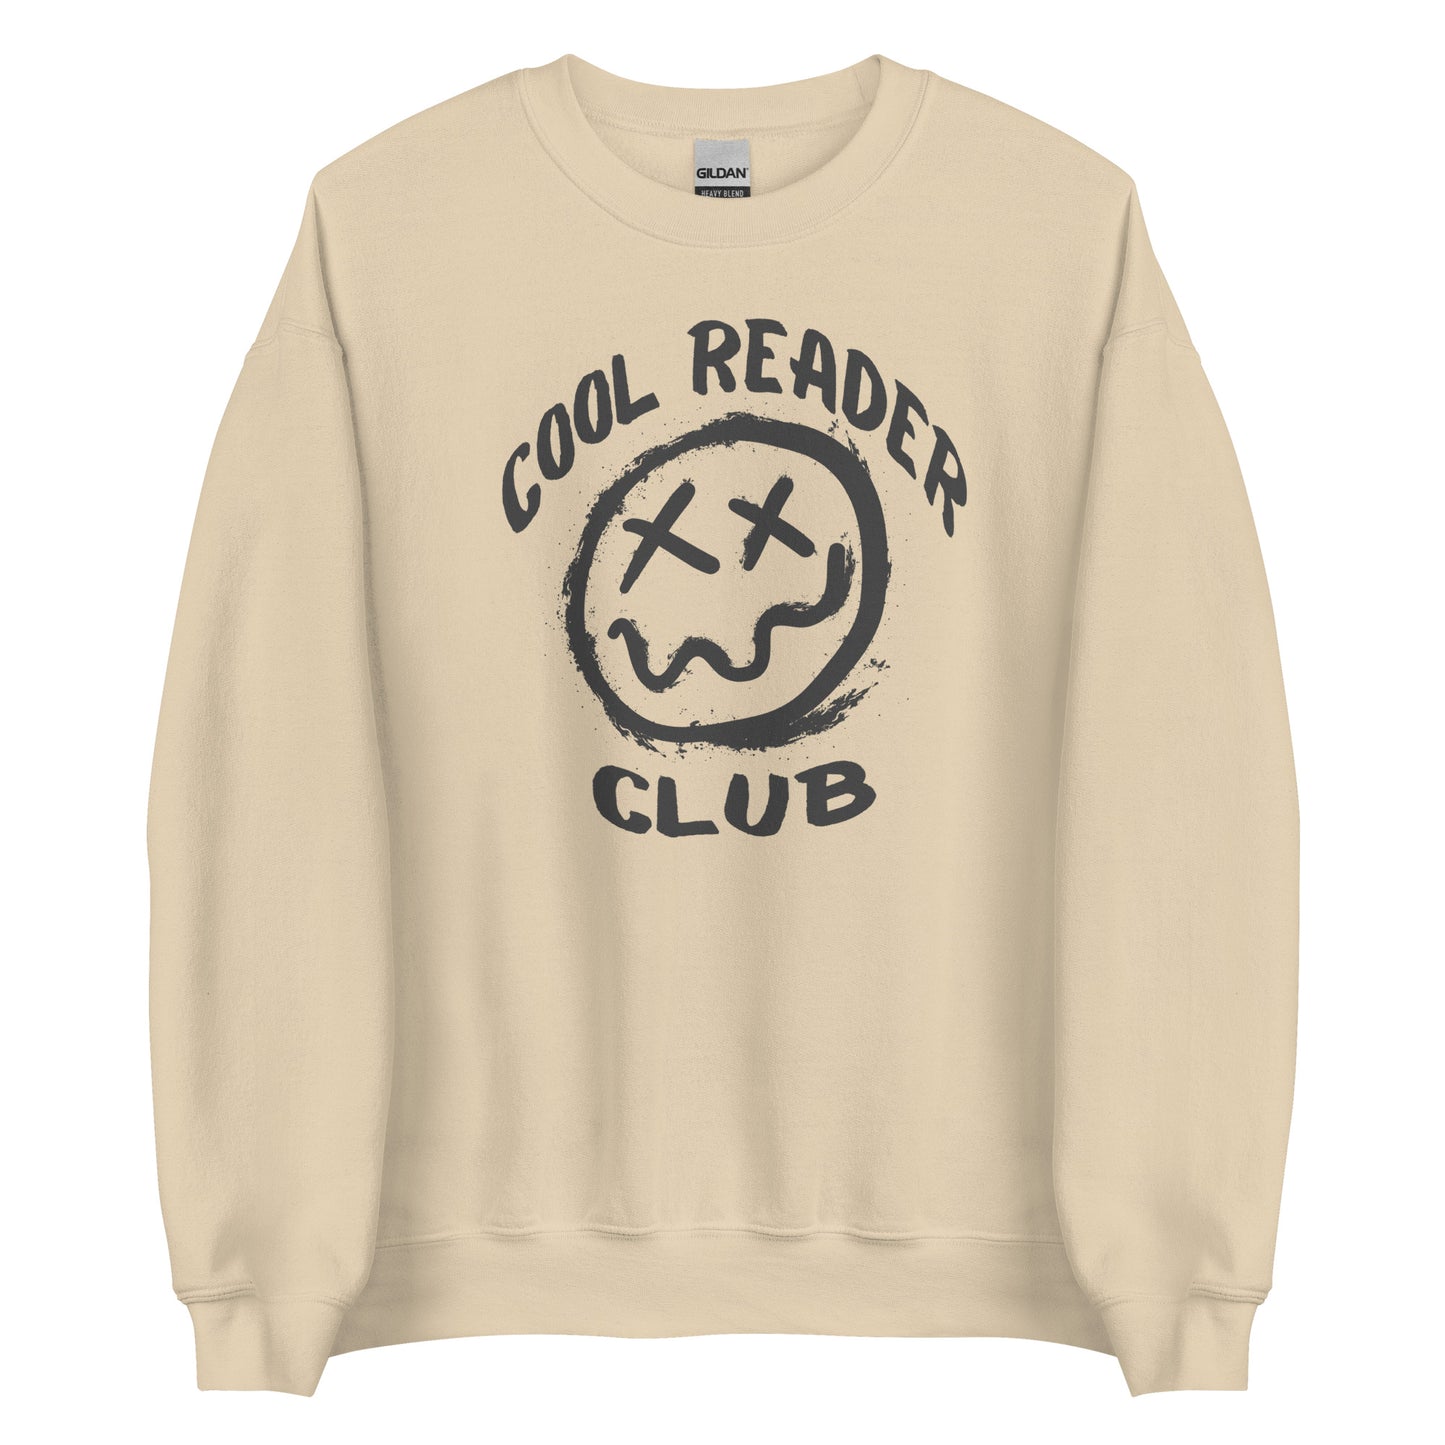 cool reader club sweatshirt